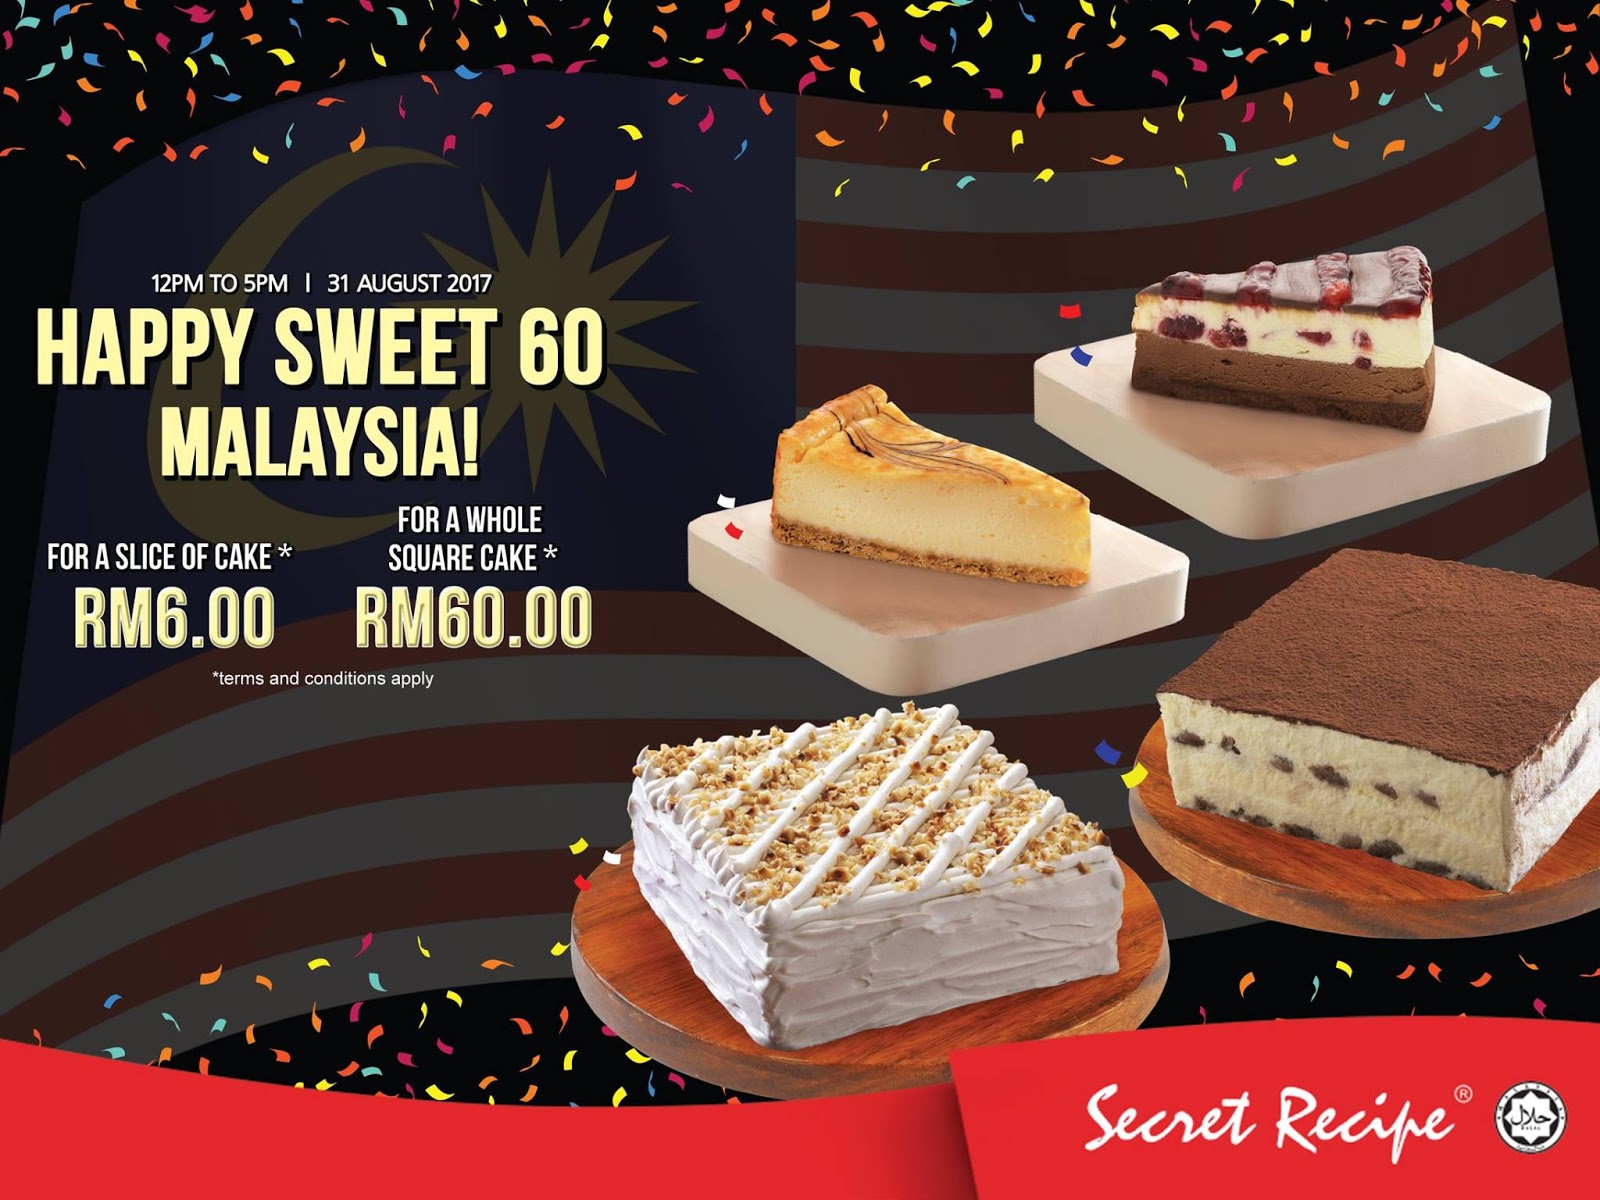 Secret Recipe Cake Slice RM6, Whole Square Cake RM60 12PM - 5PM 31